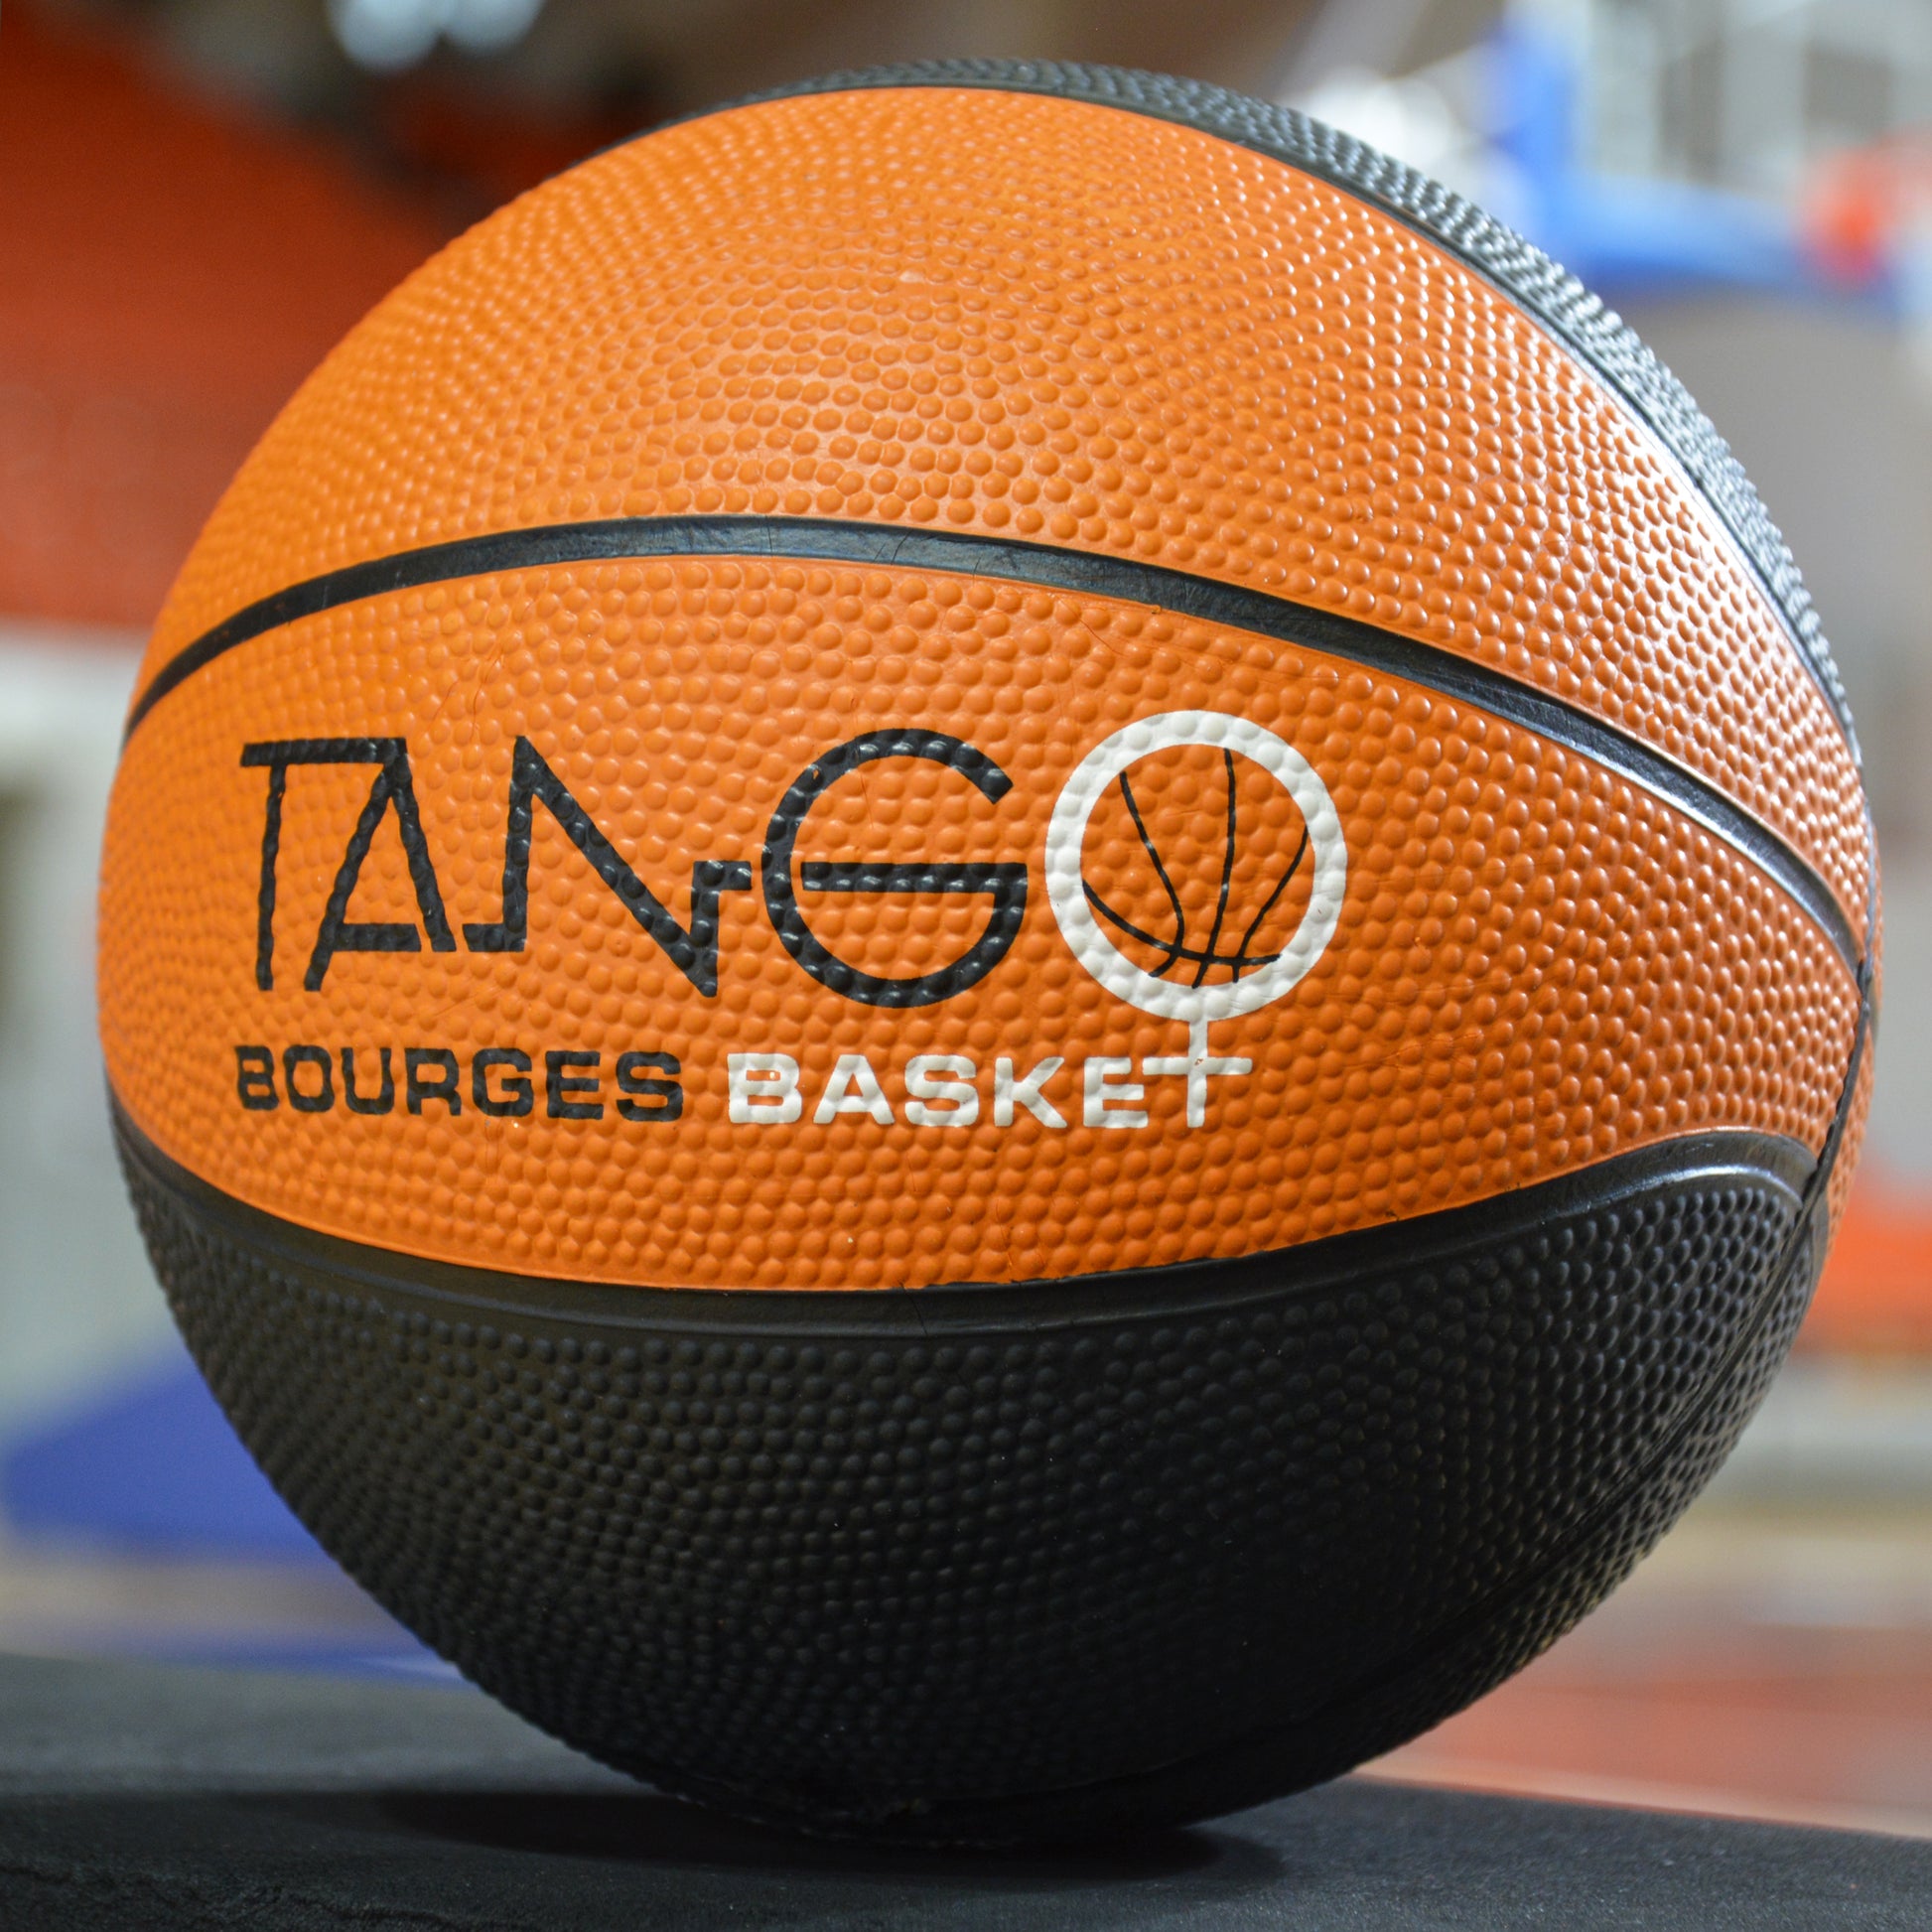 Mini ballon Tango – Tango Bourges Basket Boutique en Ligne